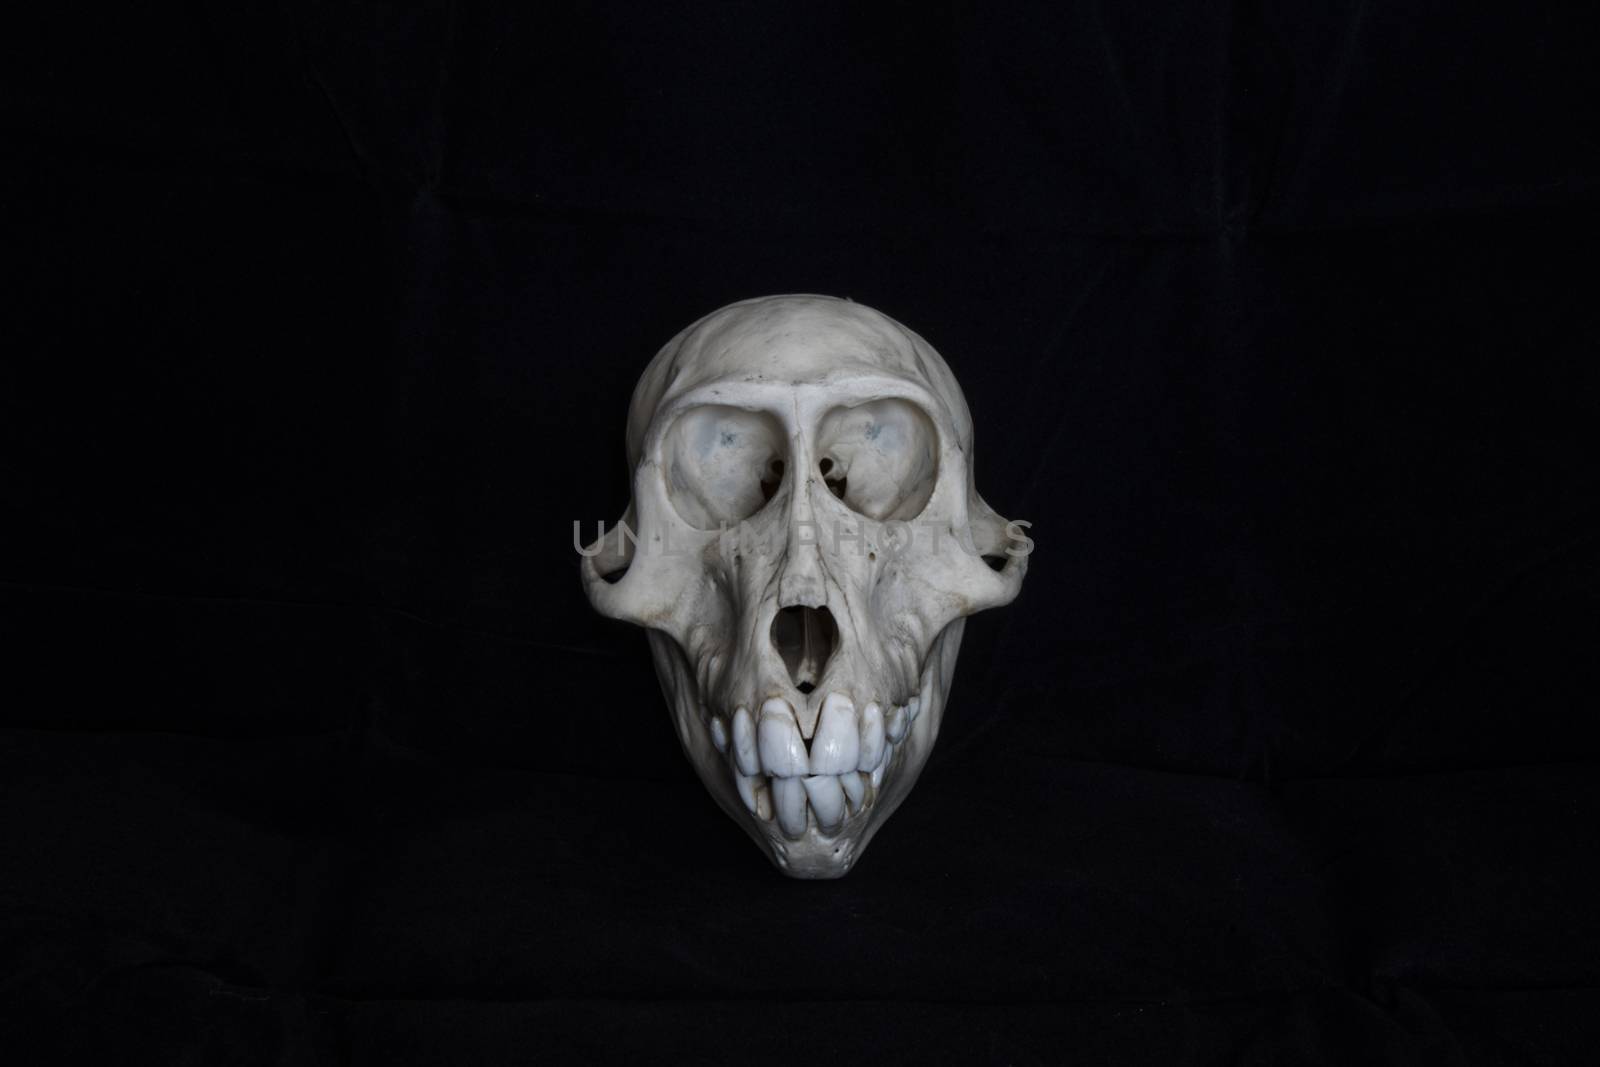 Monkey skull with black background by bluiten